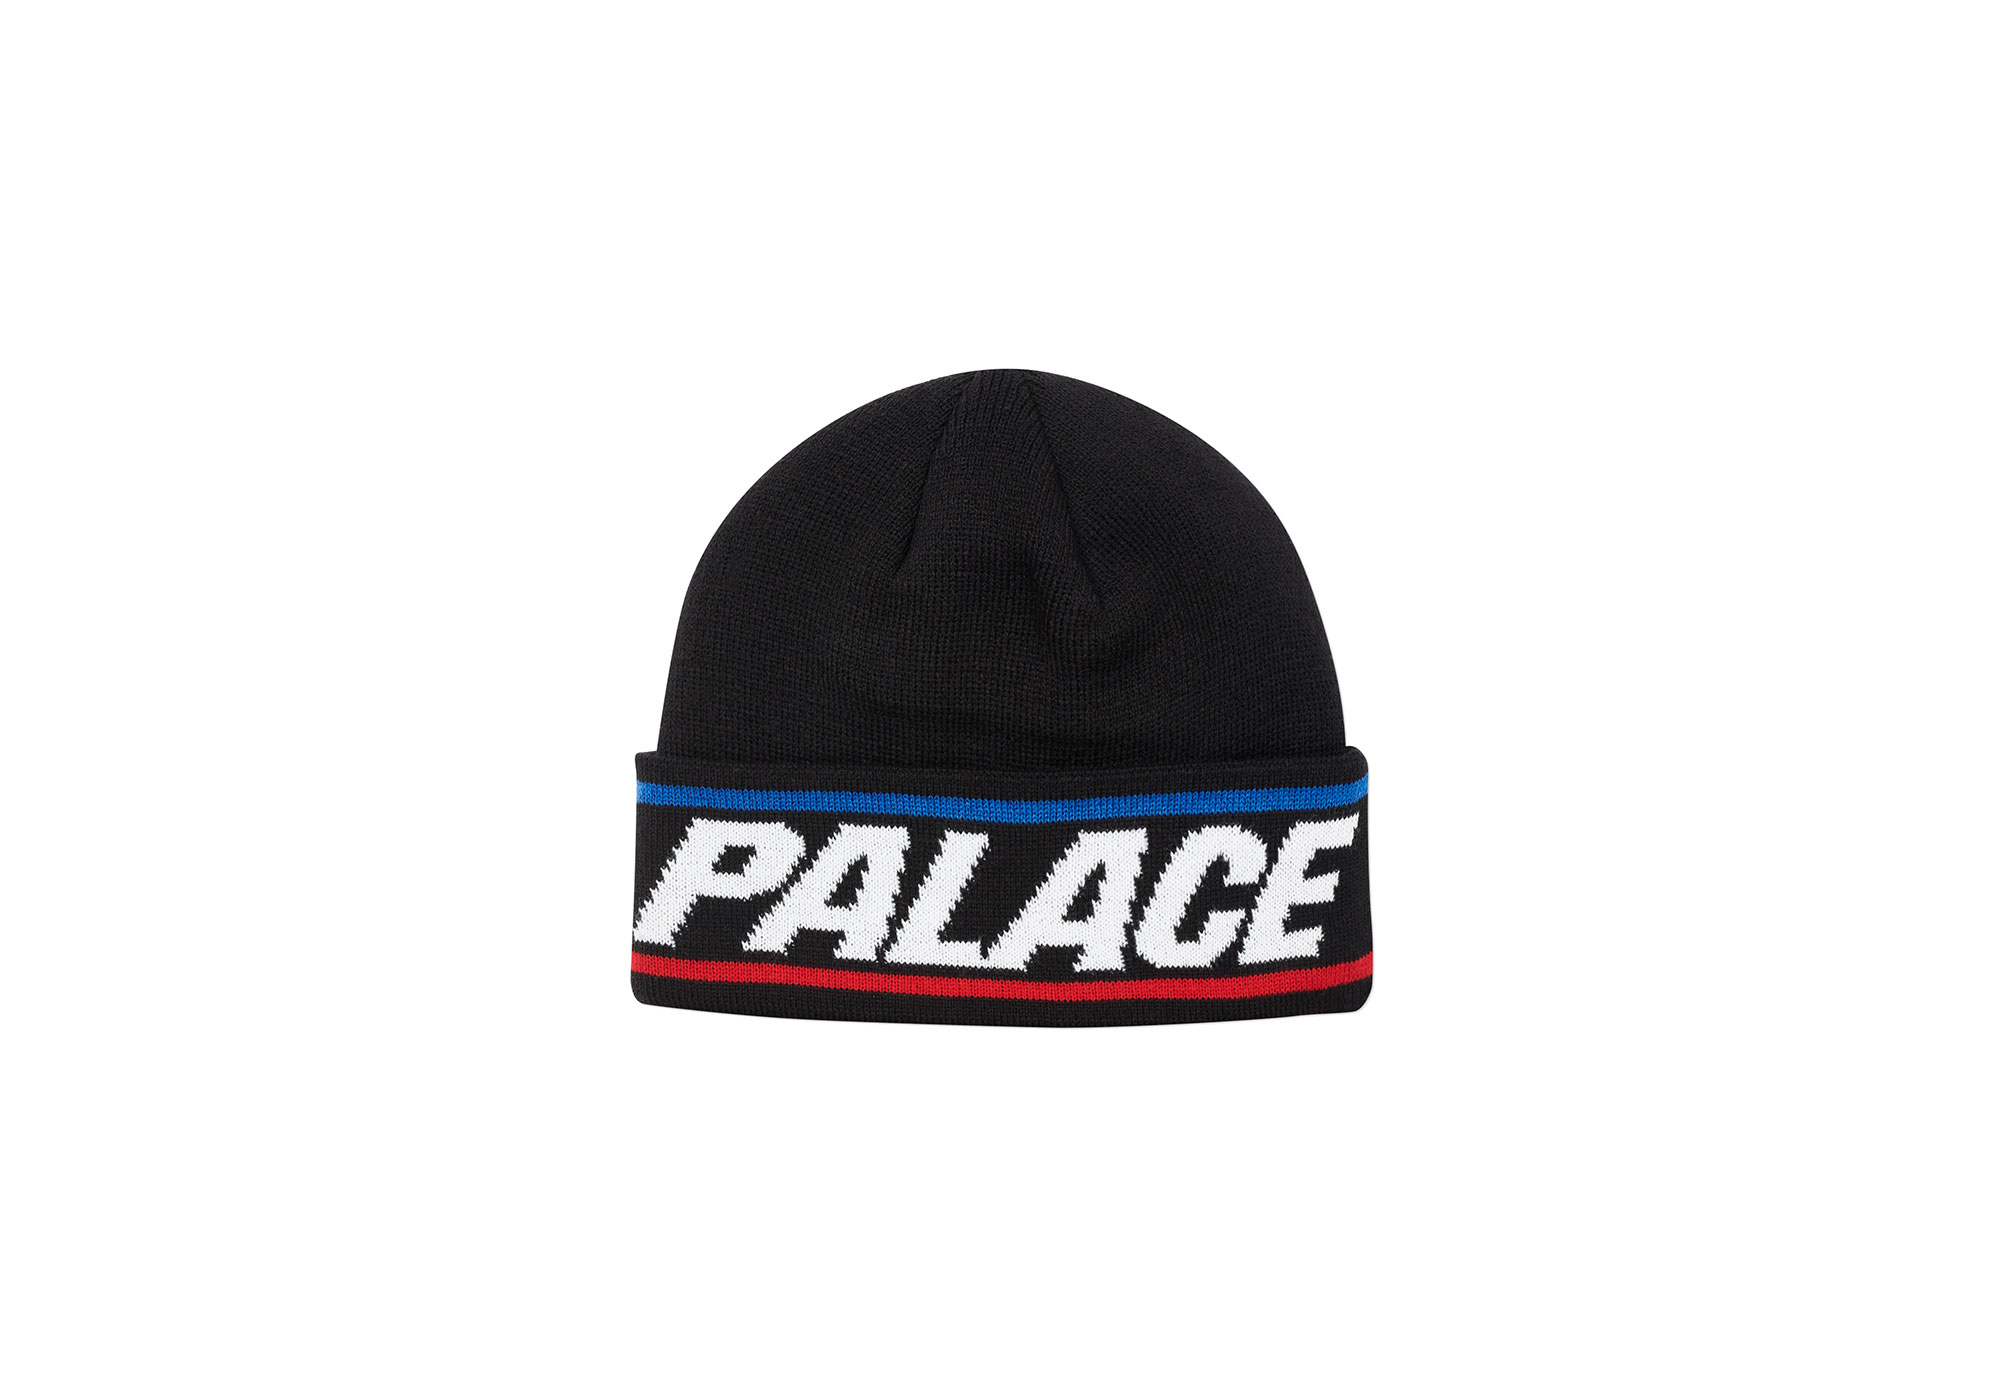 Palace S-Line Beanie Black - FW20 - US